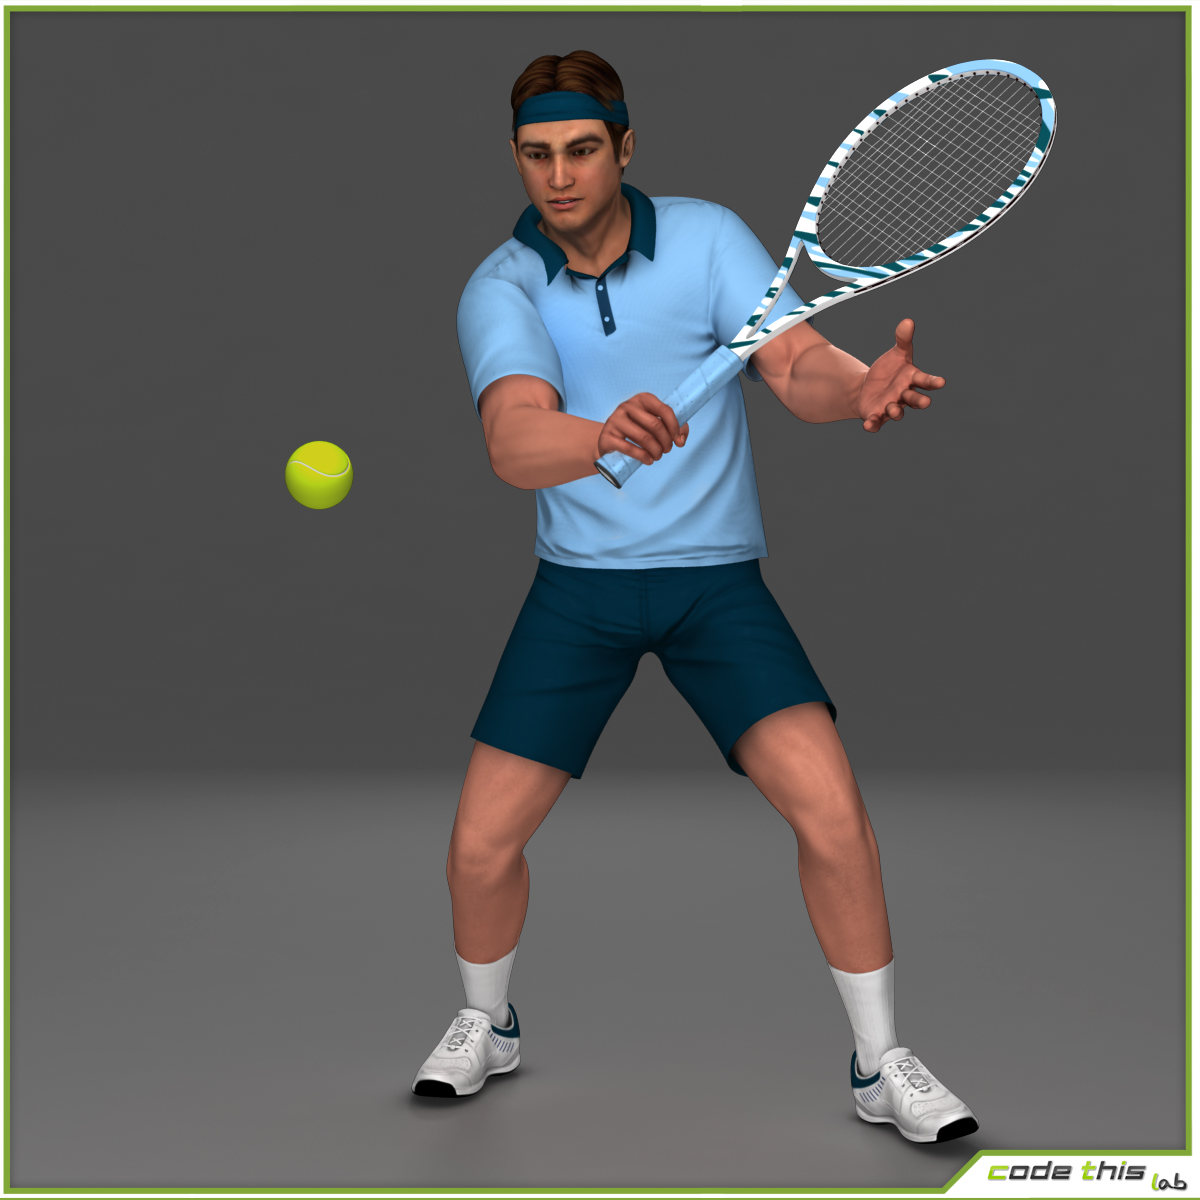 https://www.turbosquid.com/3d-models/racket-tennis-player-cg-3d-model/75391...